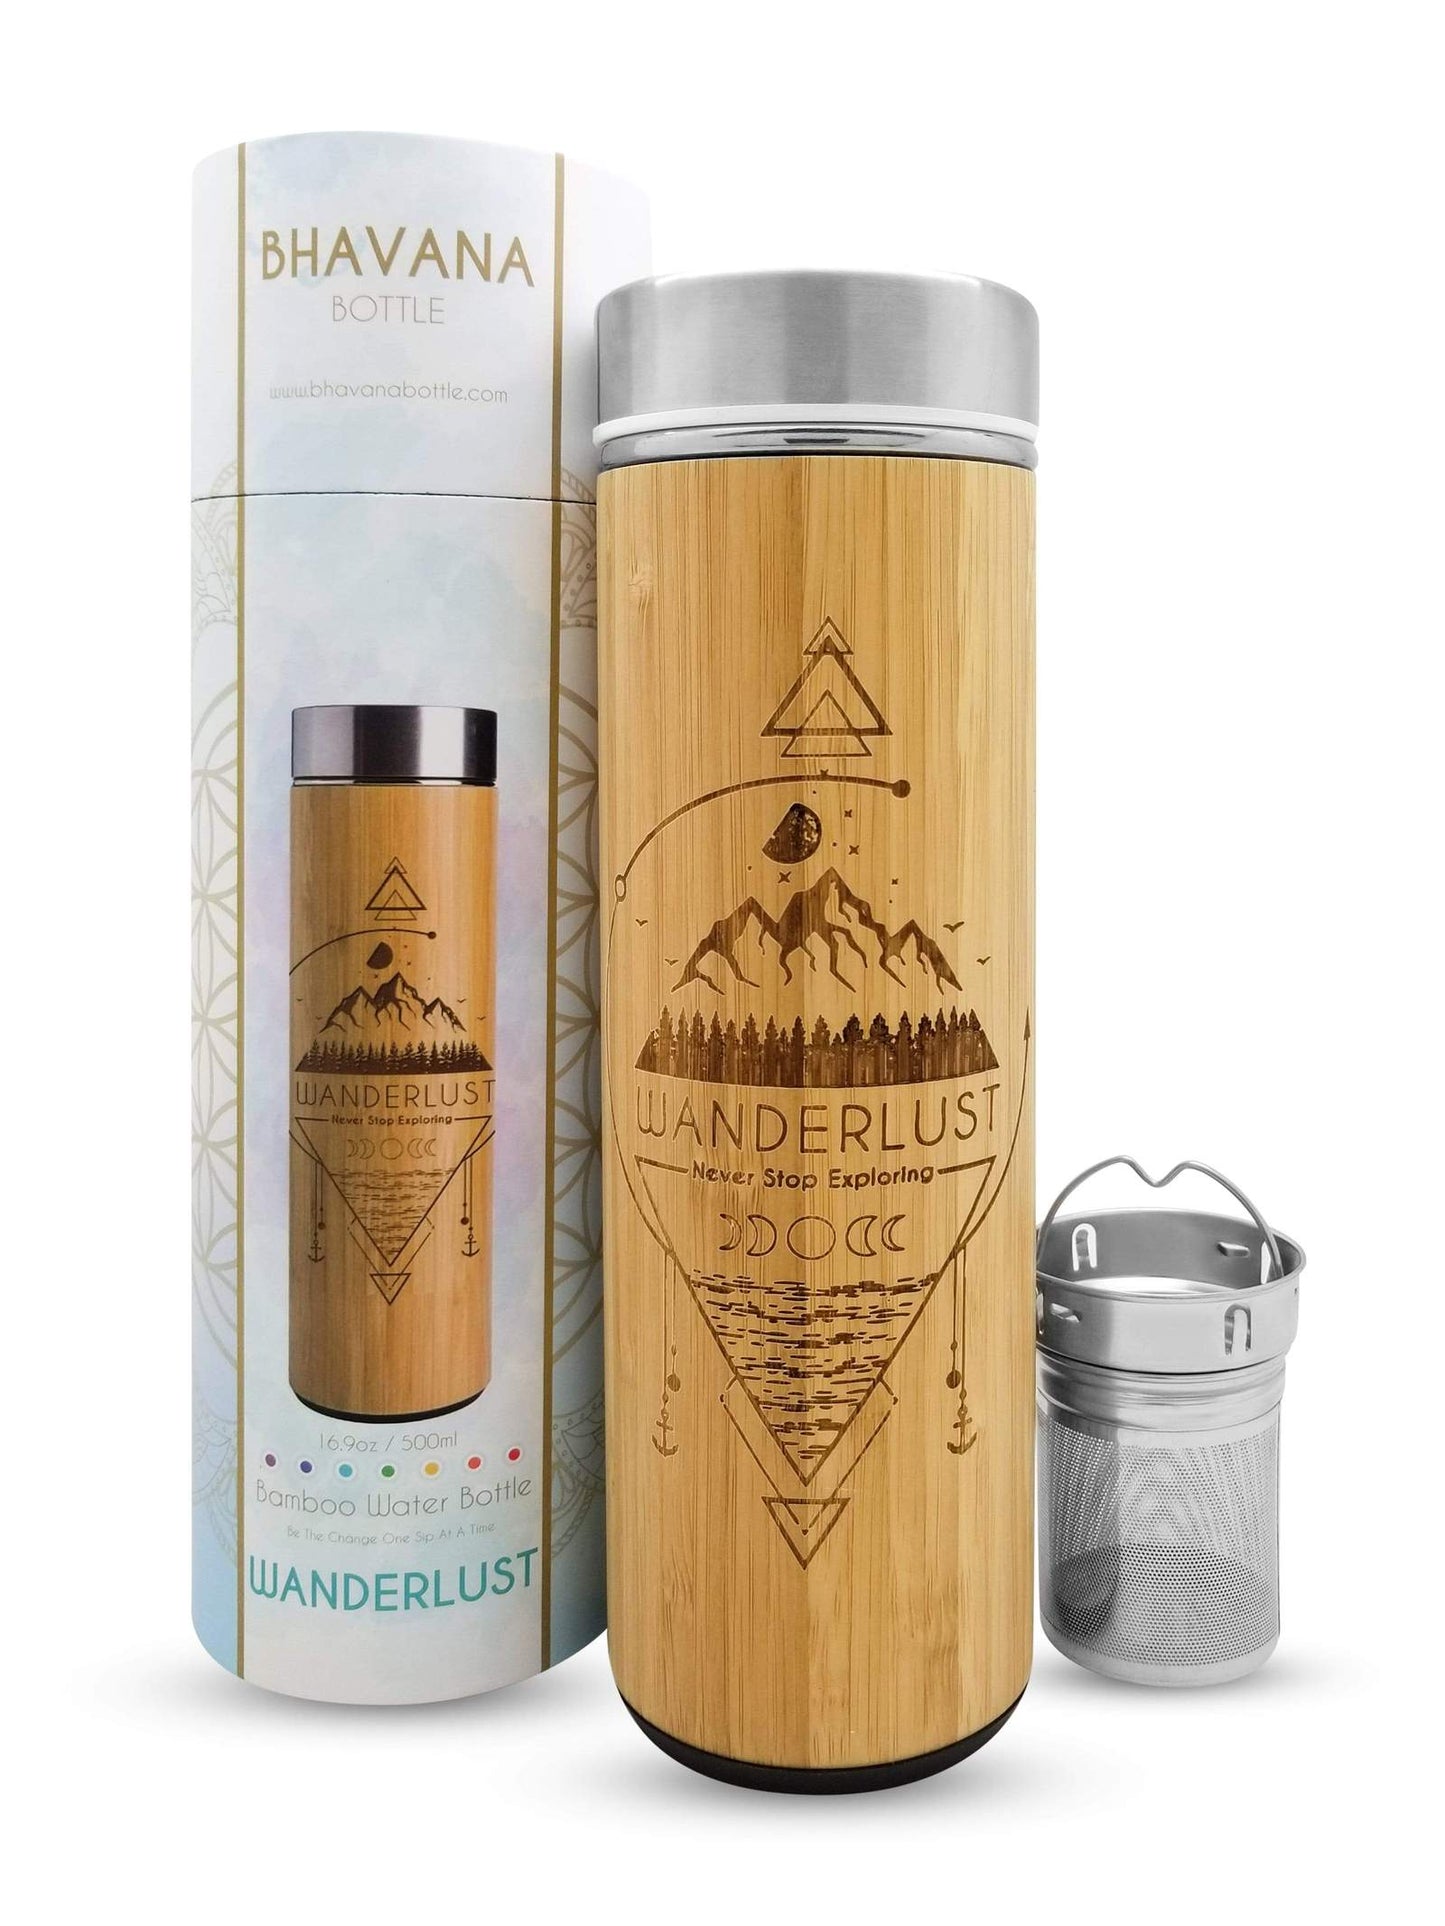 Bhavana WANDERLUST Bamboo Water Bottle - 17.9oz